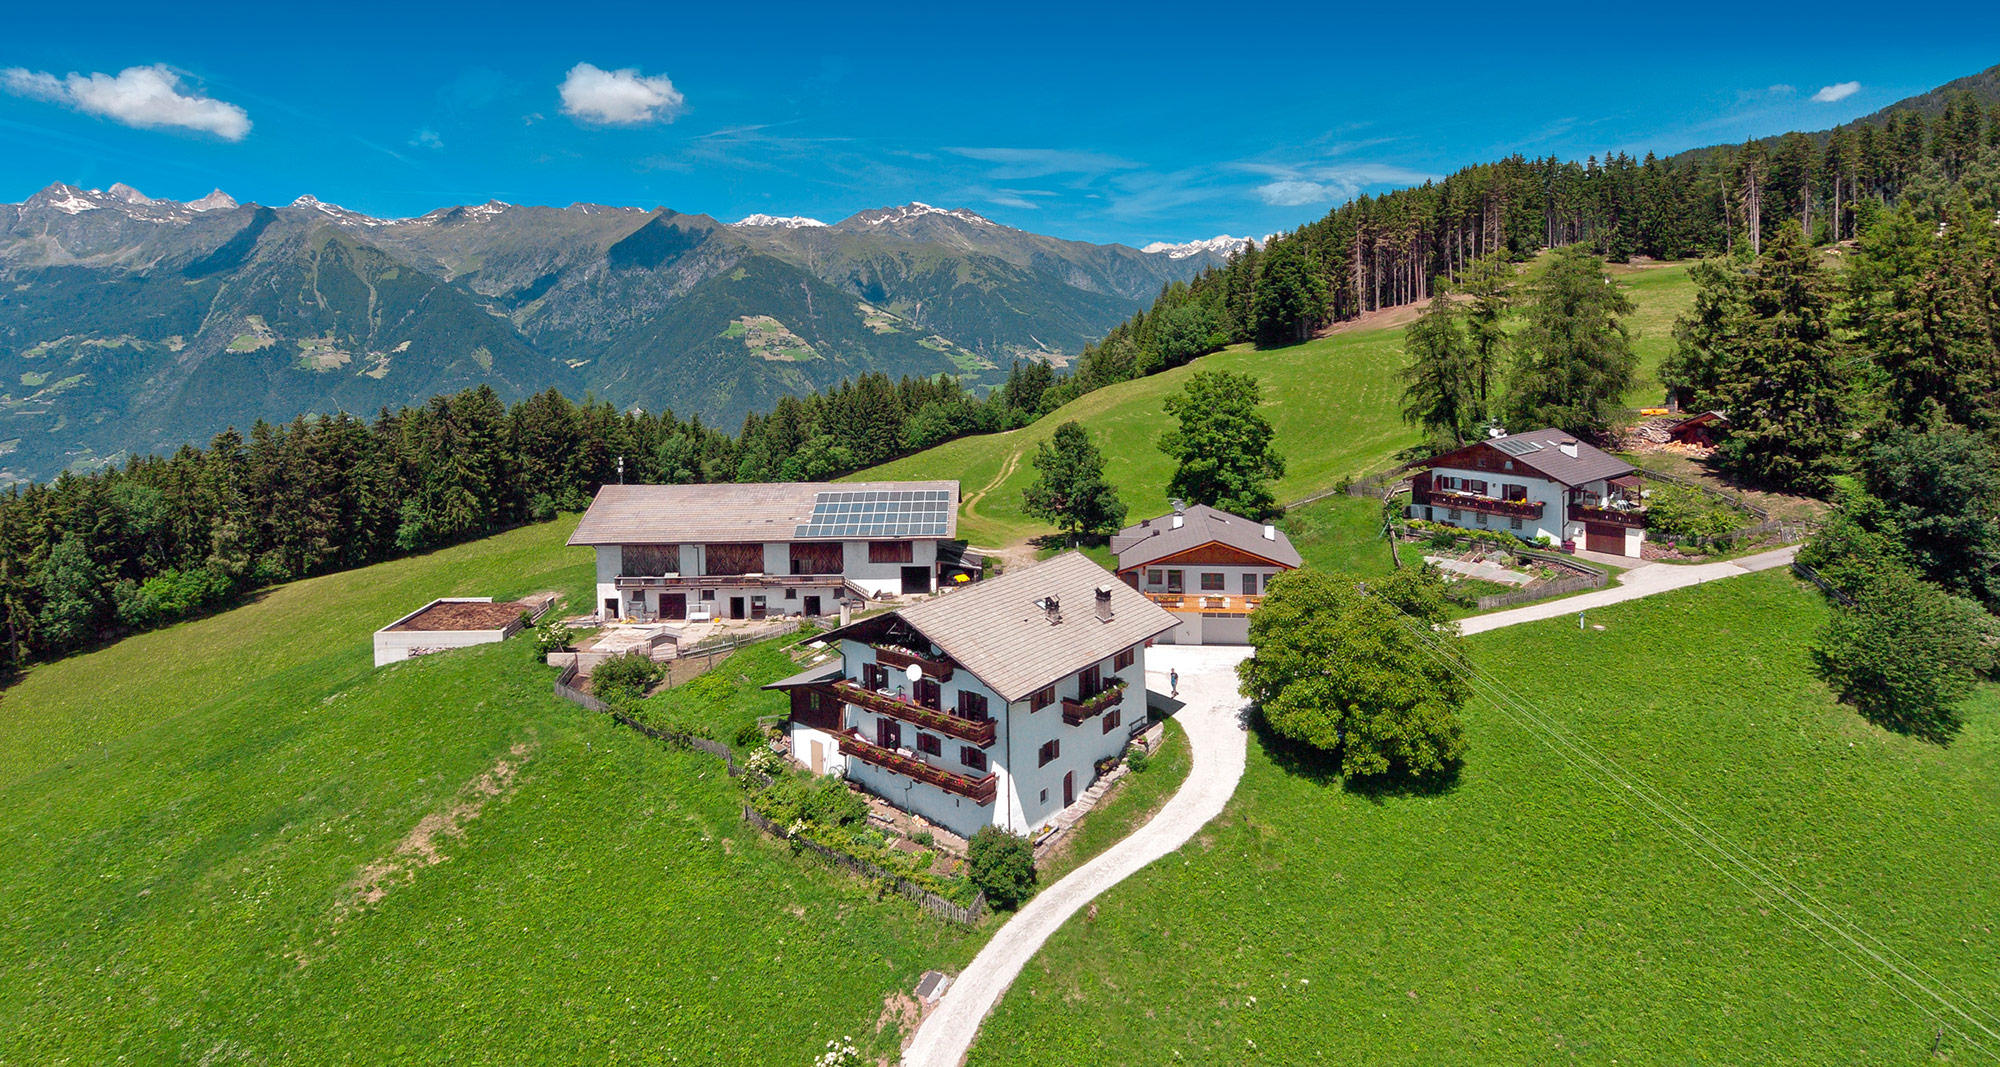 Der Pichler Hof in Hafling bei Meran, Südtirol